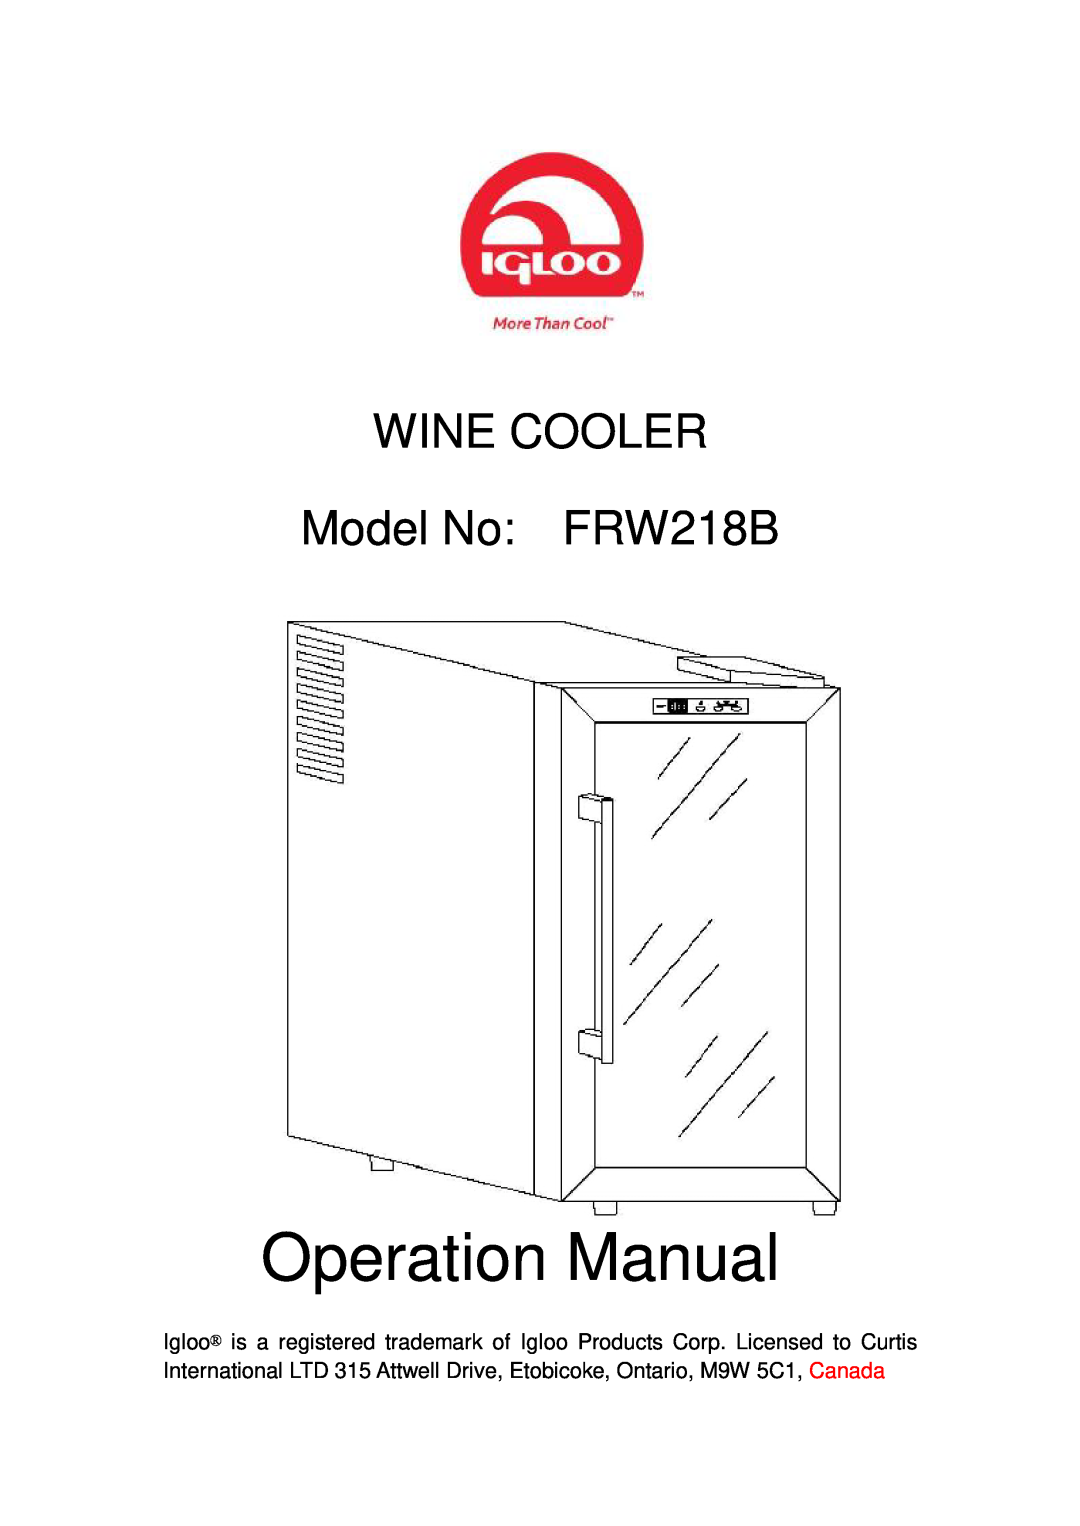 Igloo operation manual Operation Manual, WINE COOLER Model No FRW218B 